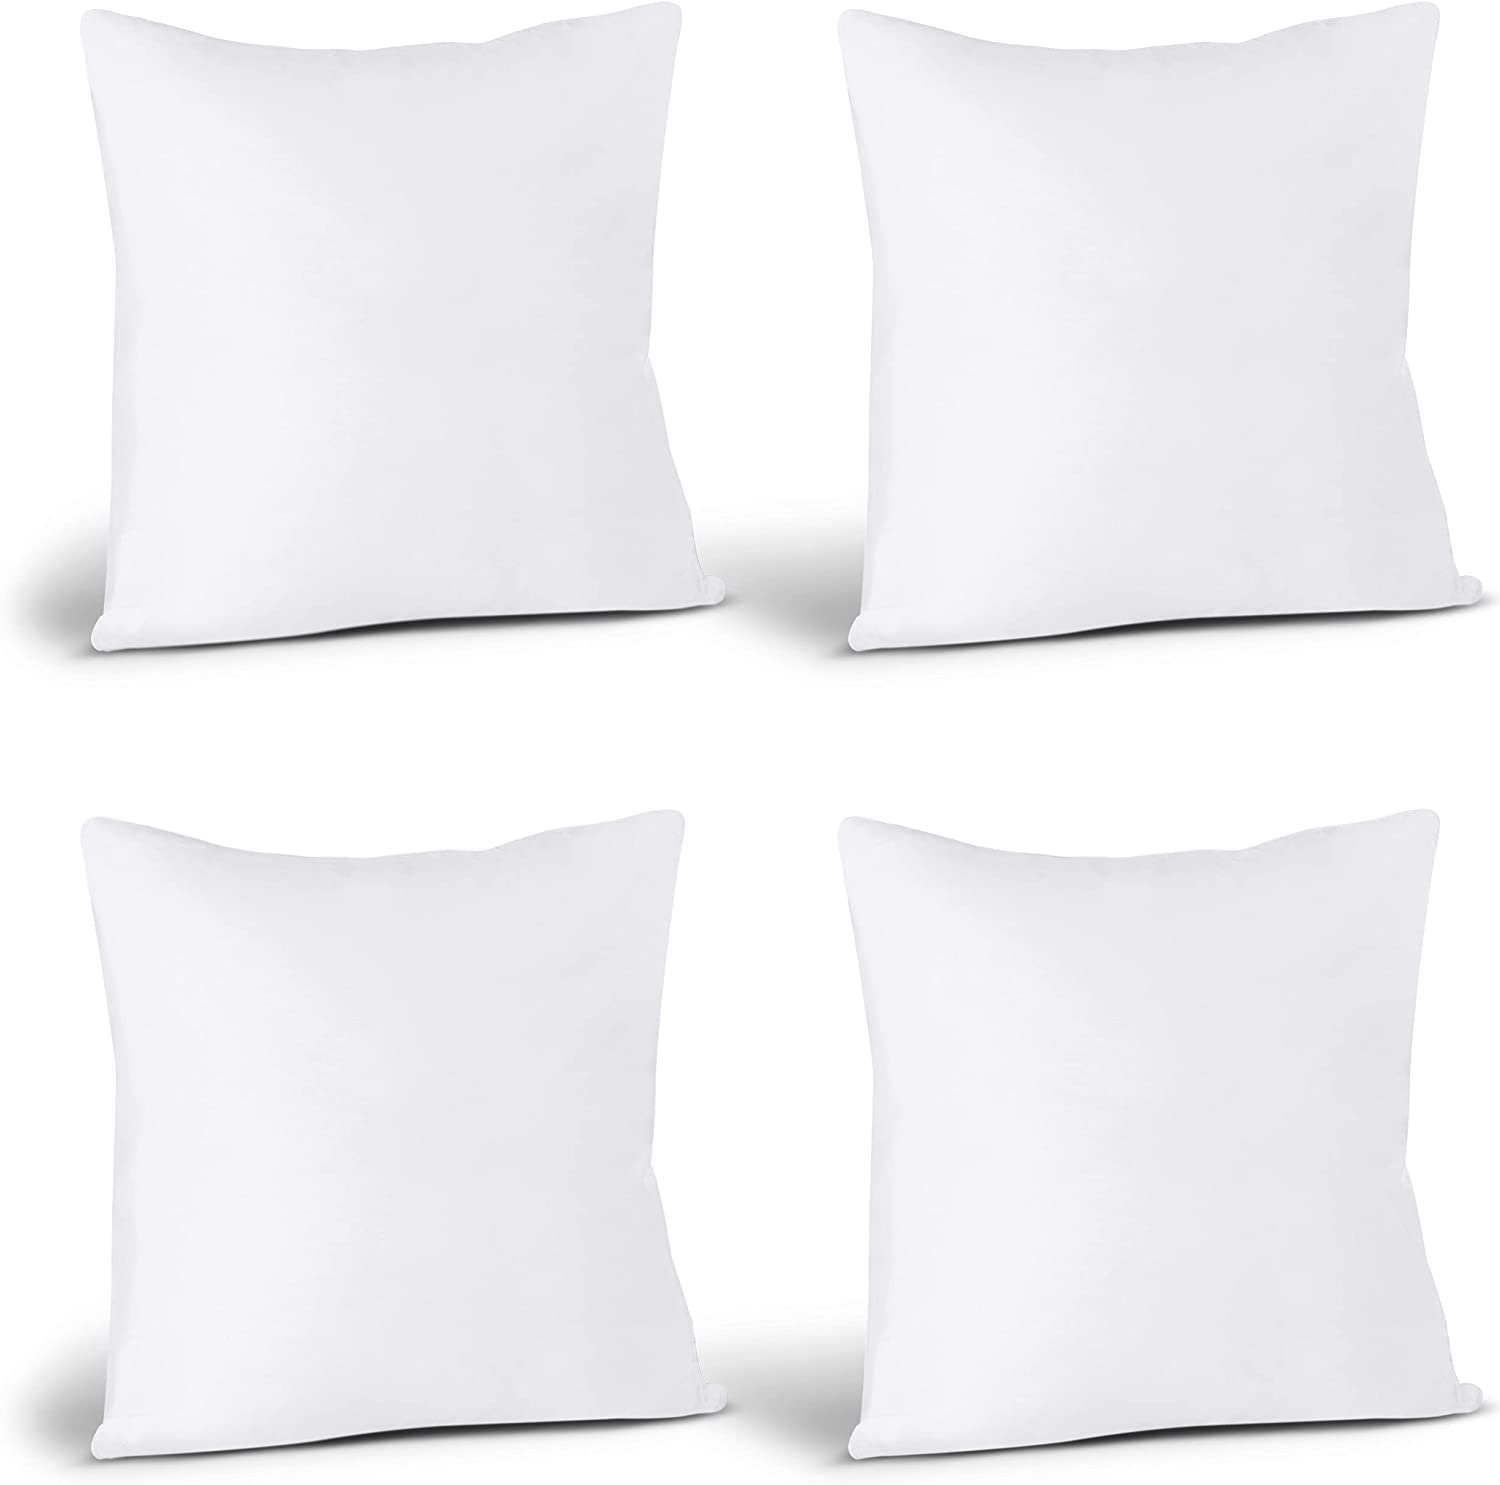 Utopia Bedding Throw Pillows Insert (Pack of 2, White) - 20 x 20